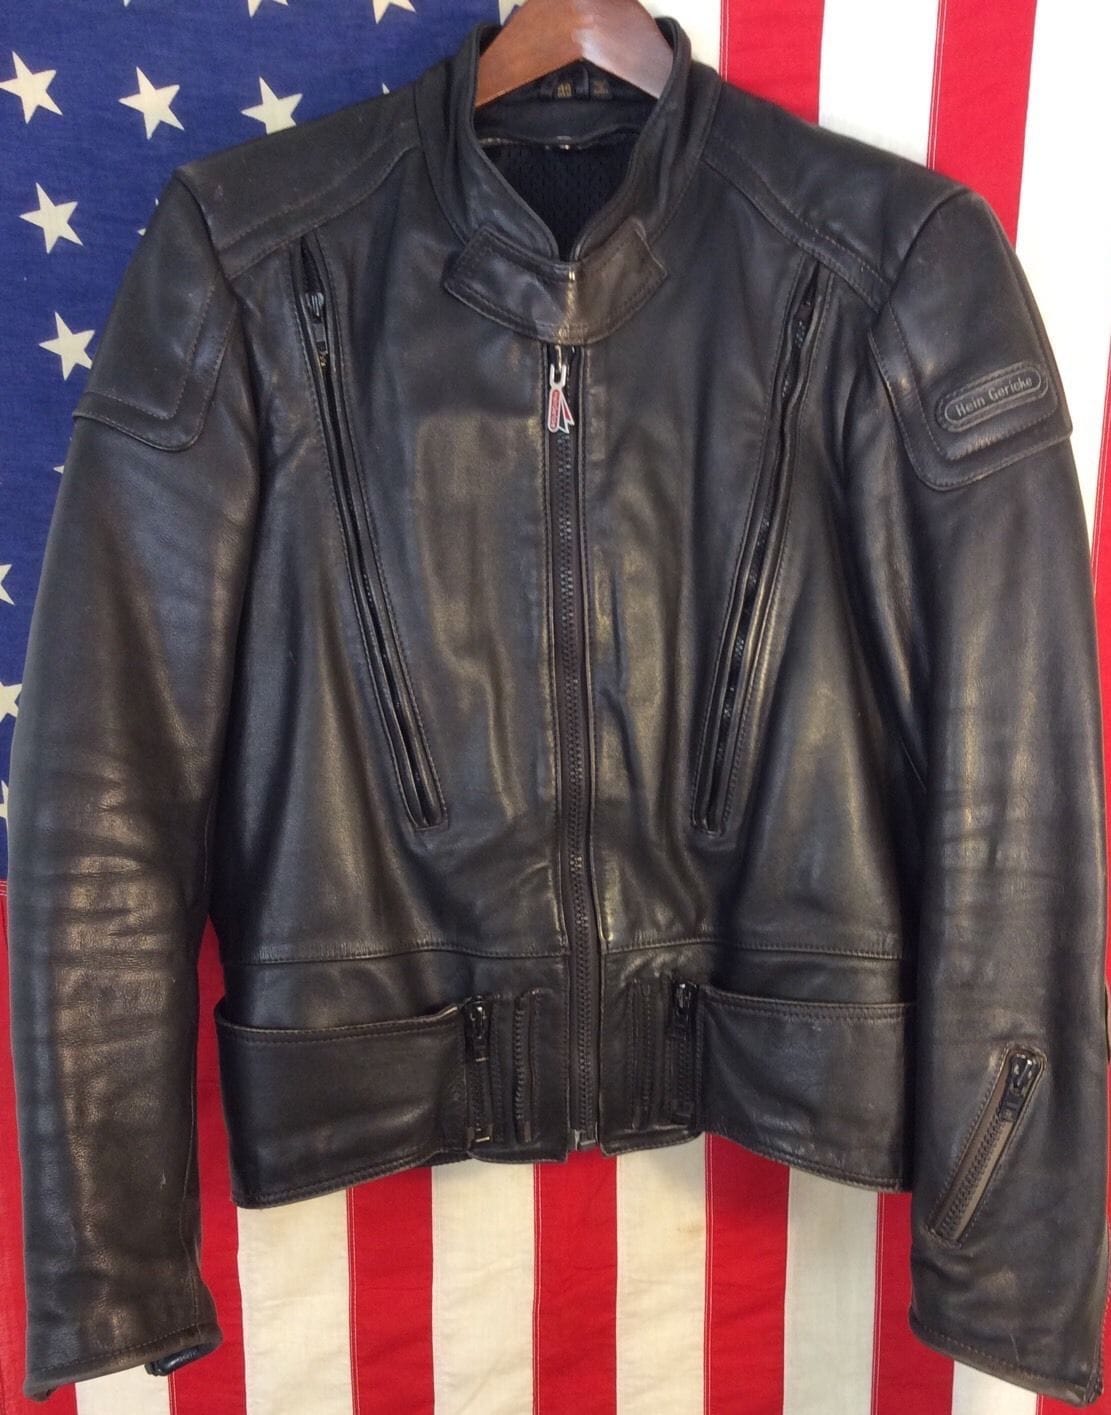 Hein Gericke Motorcycle Jacket M-L $125 Shipped - Harley Davidson Forums